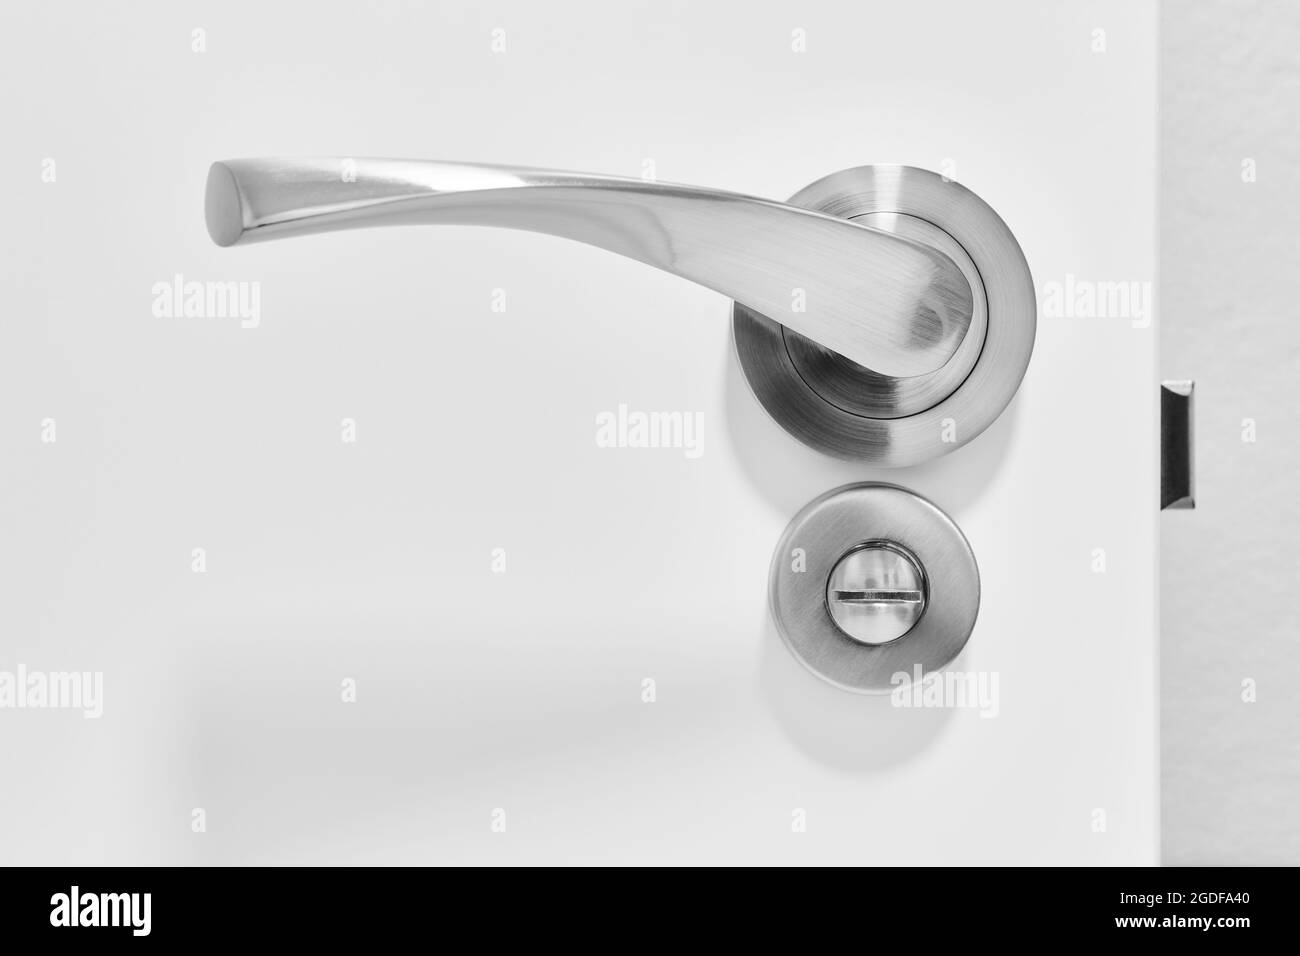 Metallic doorknob and bolt on a white wooden door. Detail Stock Photo